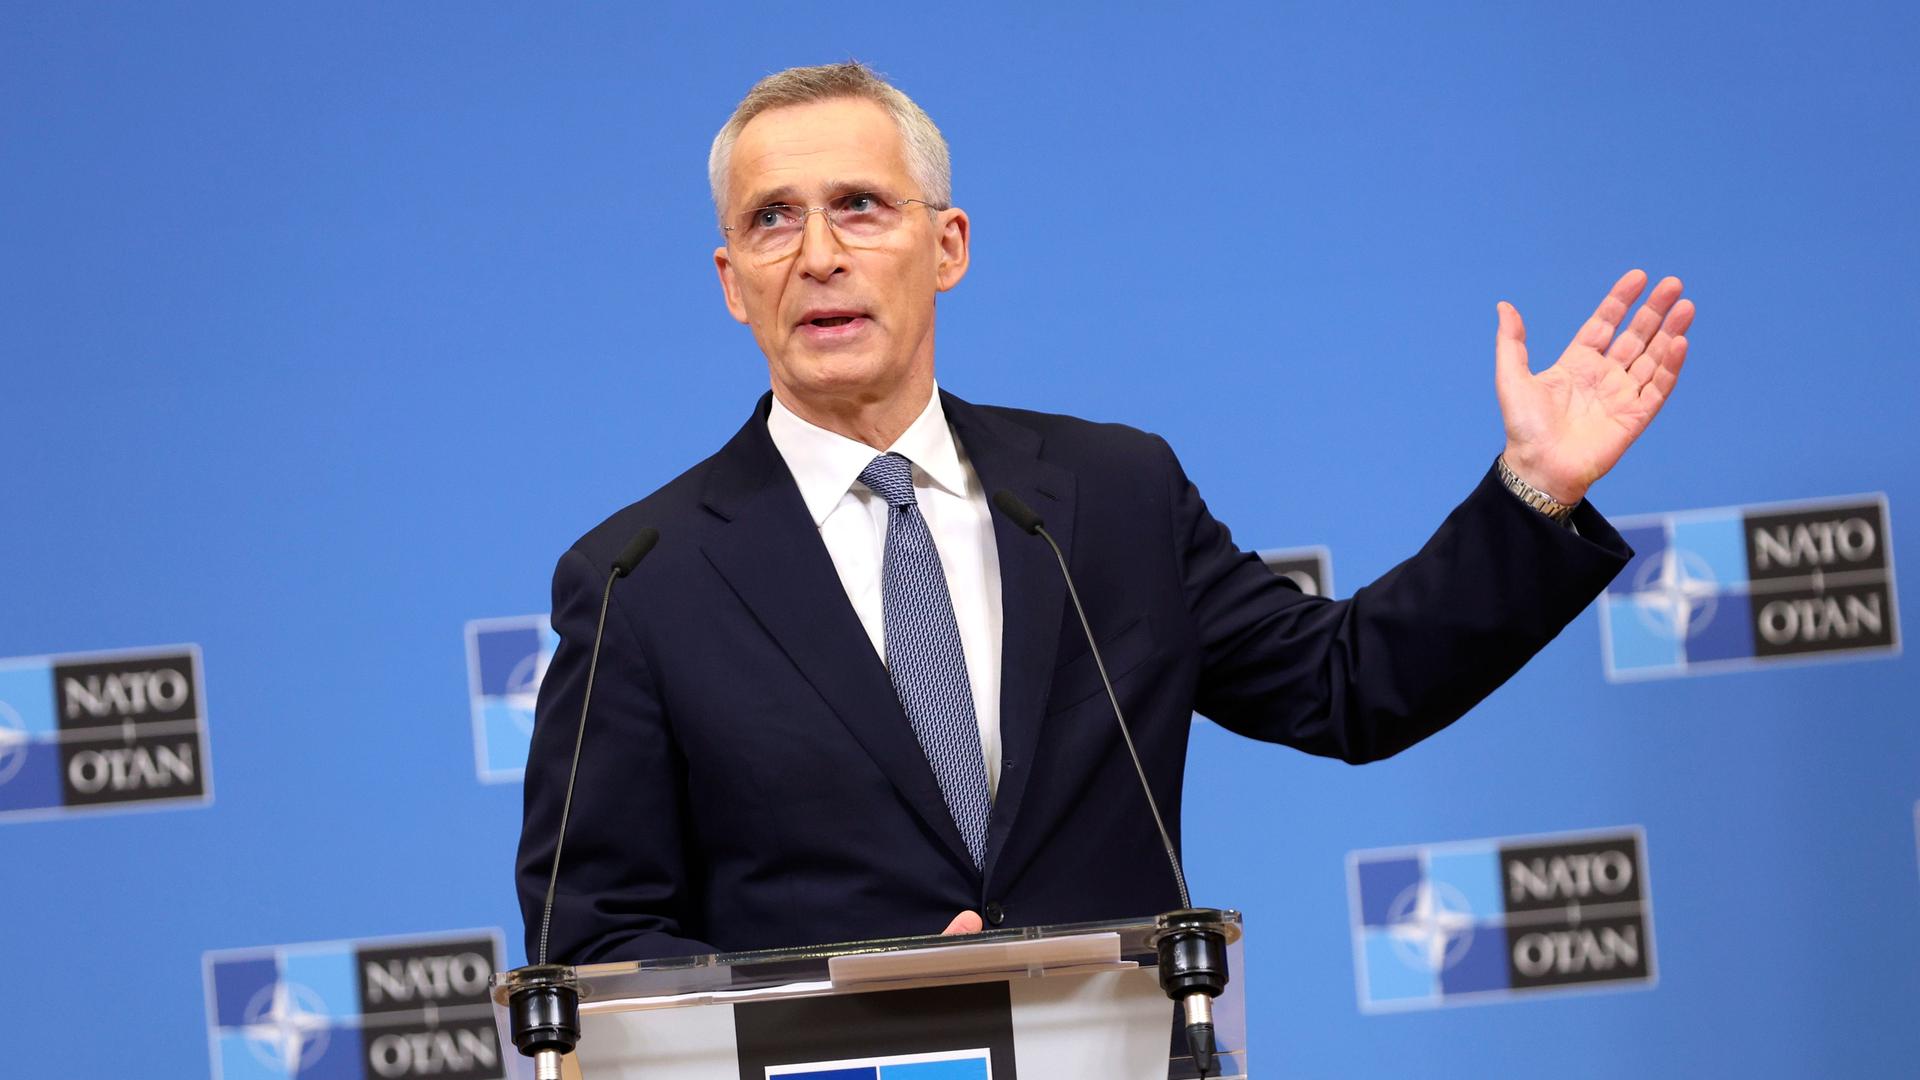 Escalation risk: NATO Secretary General responds to Germany